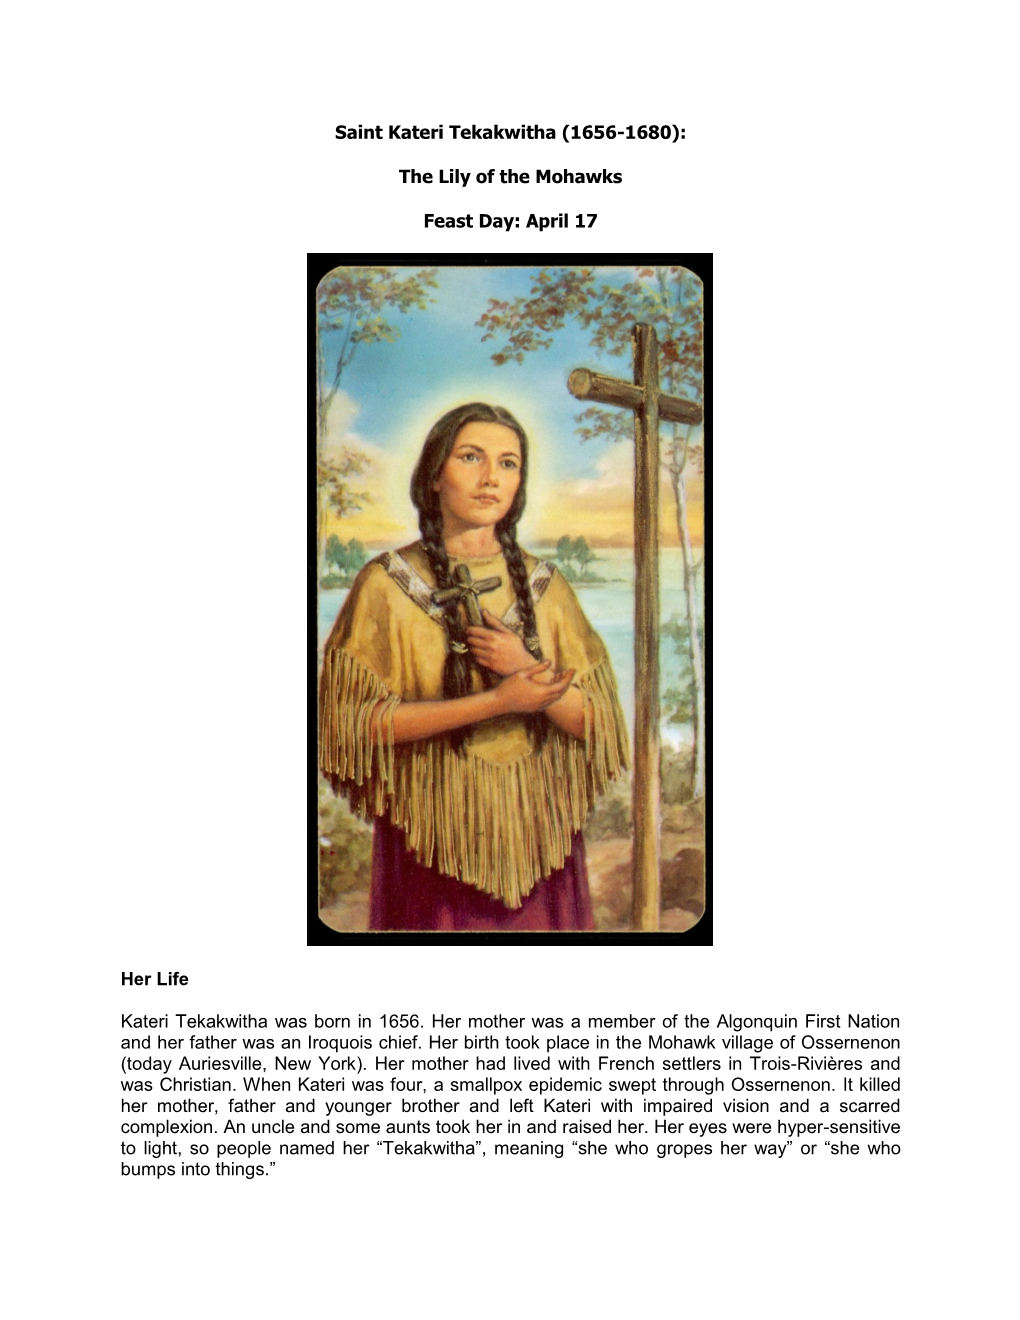 Saint Kateri Tekakwitha (1656-1680): the Lily of the Mohawks Feast